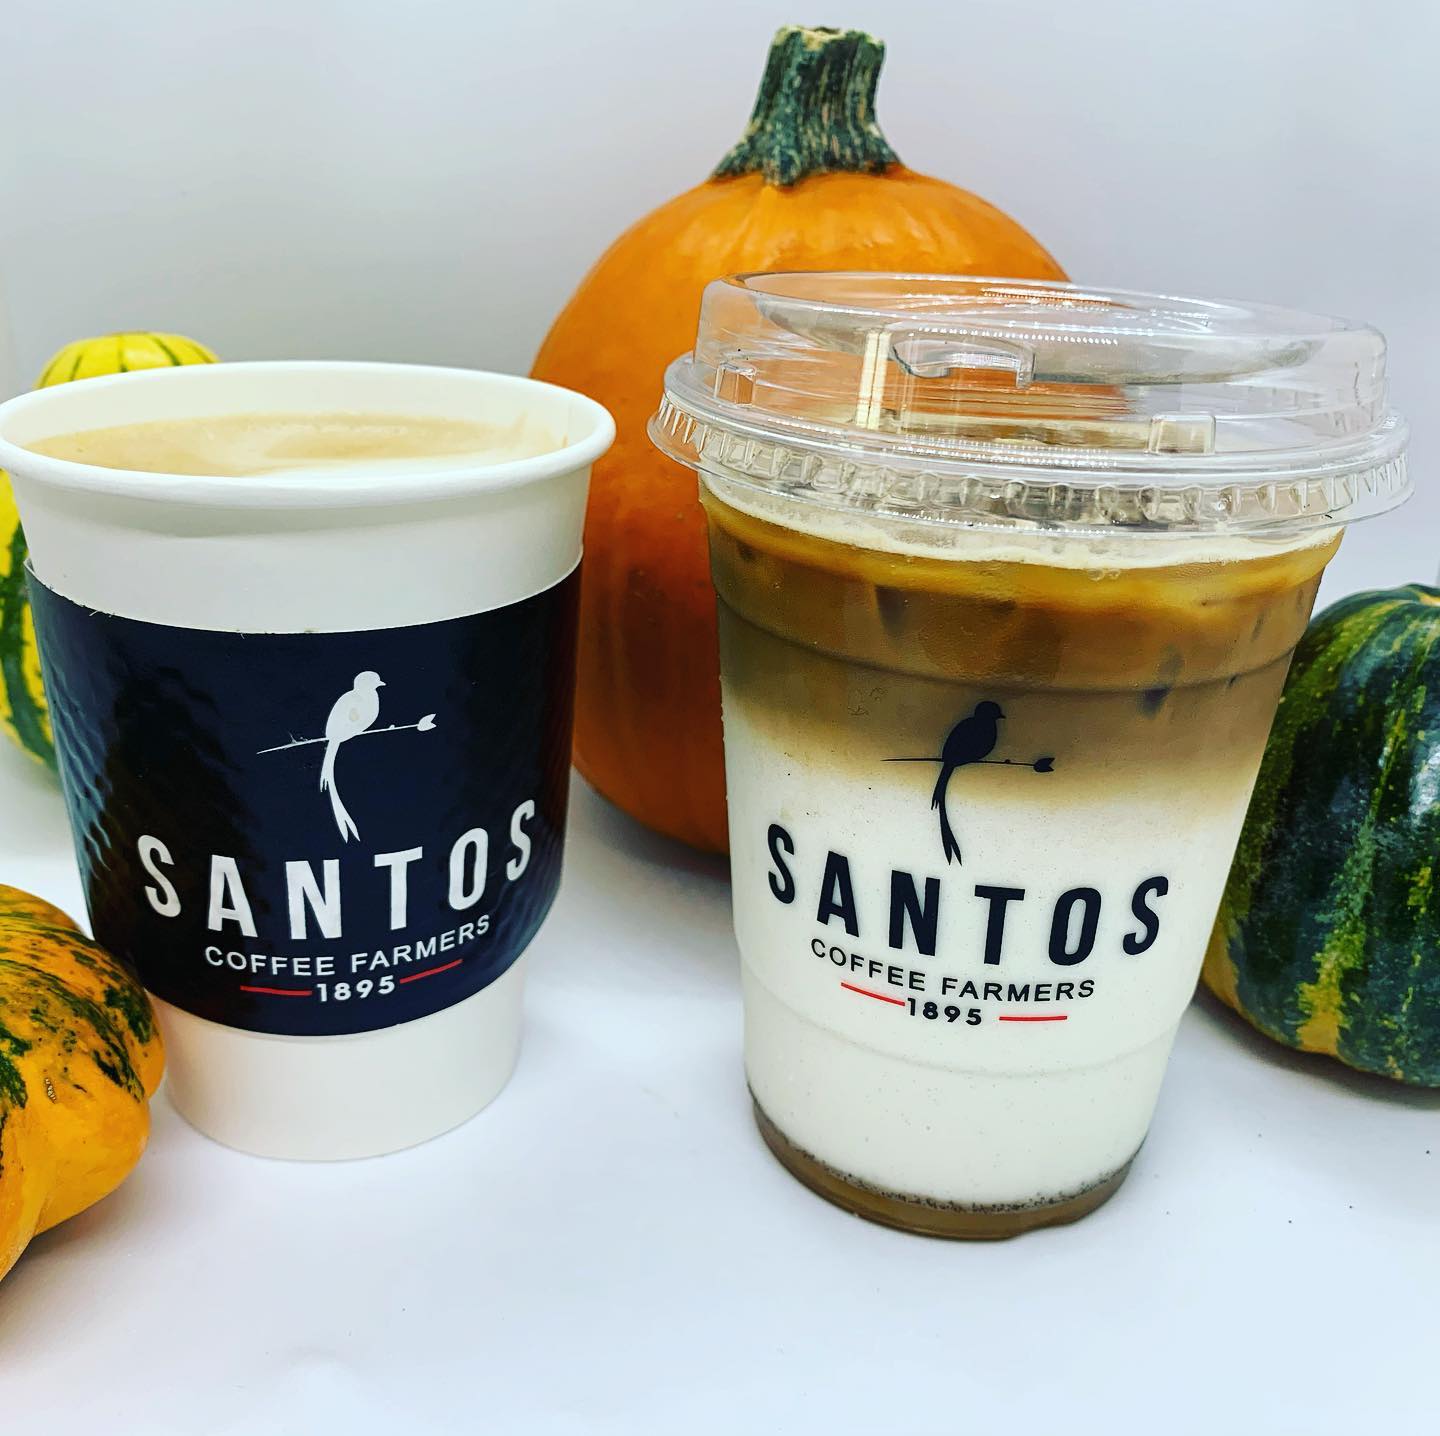 Hot coffee drink, iced coffee drink, and mini pumpkins at Santos - Birmingham coffee shops